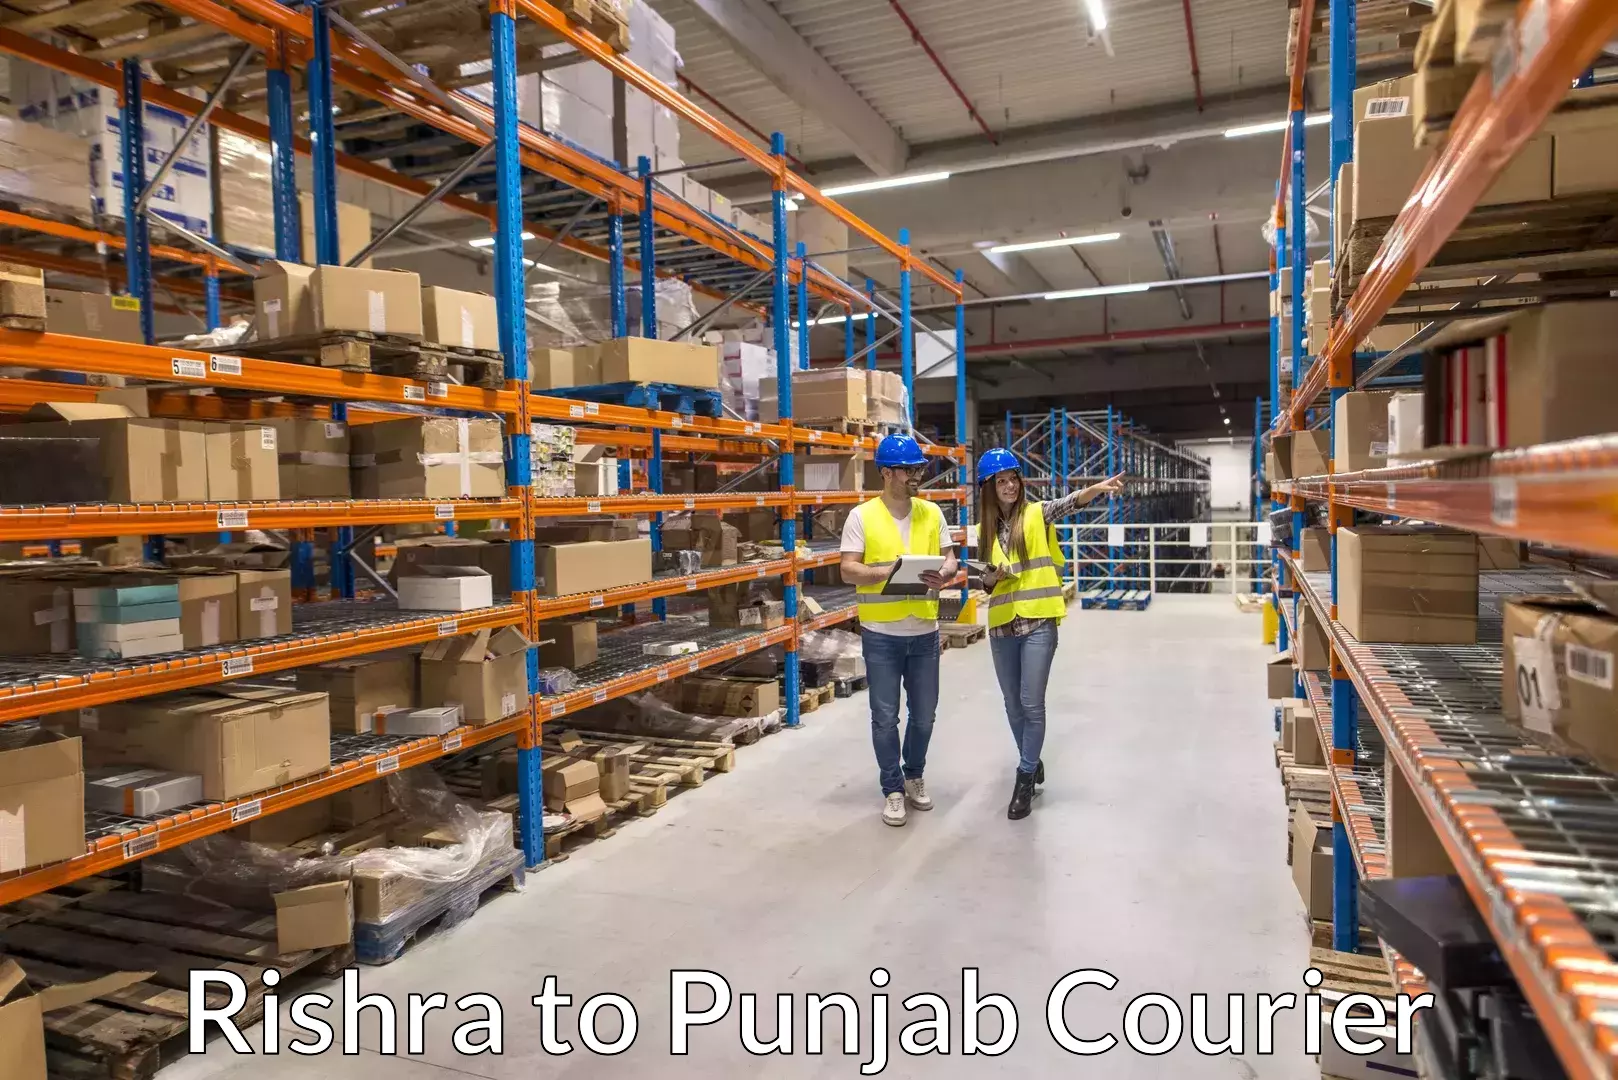 Luggage shipment specialists Rishra to Punjab